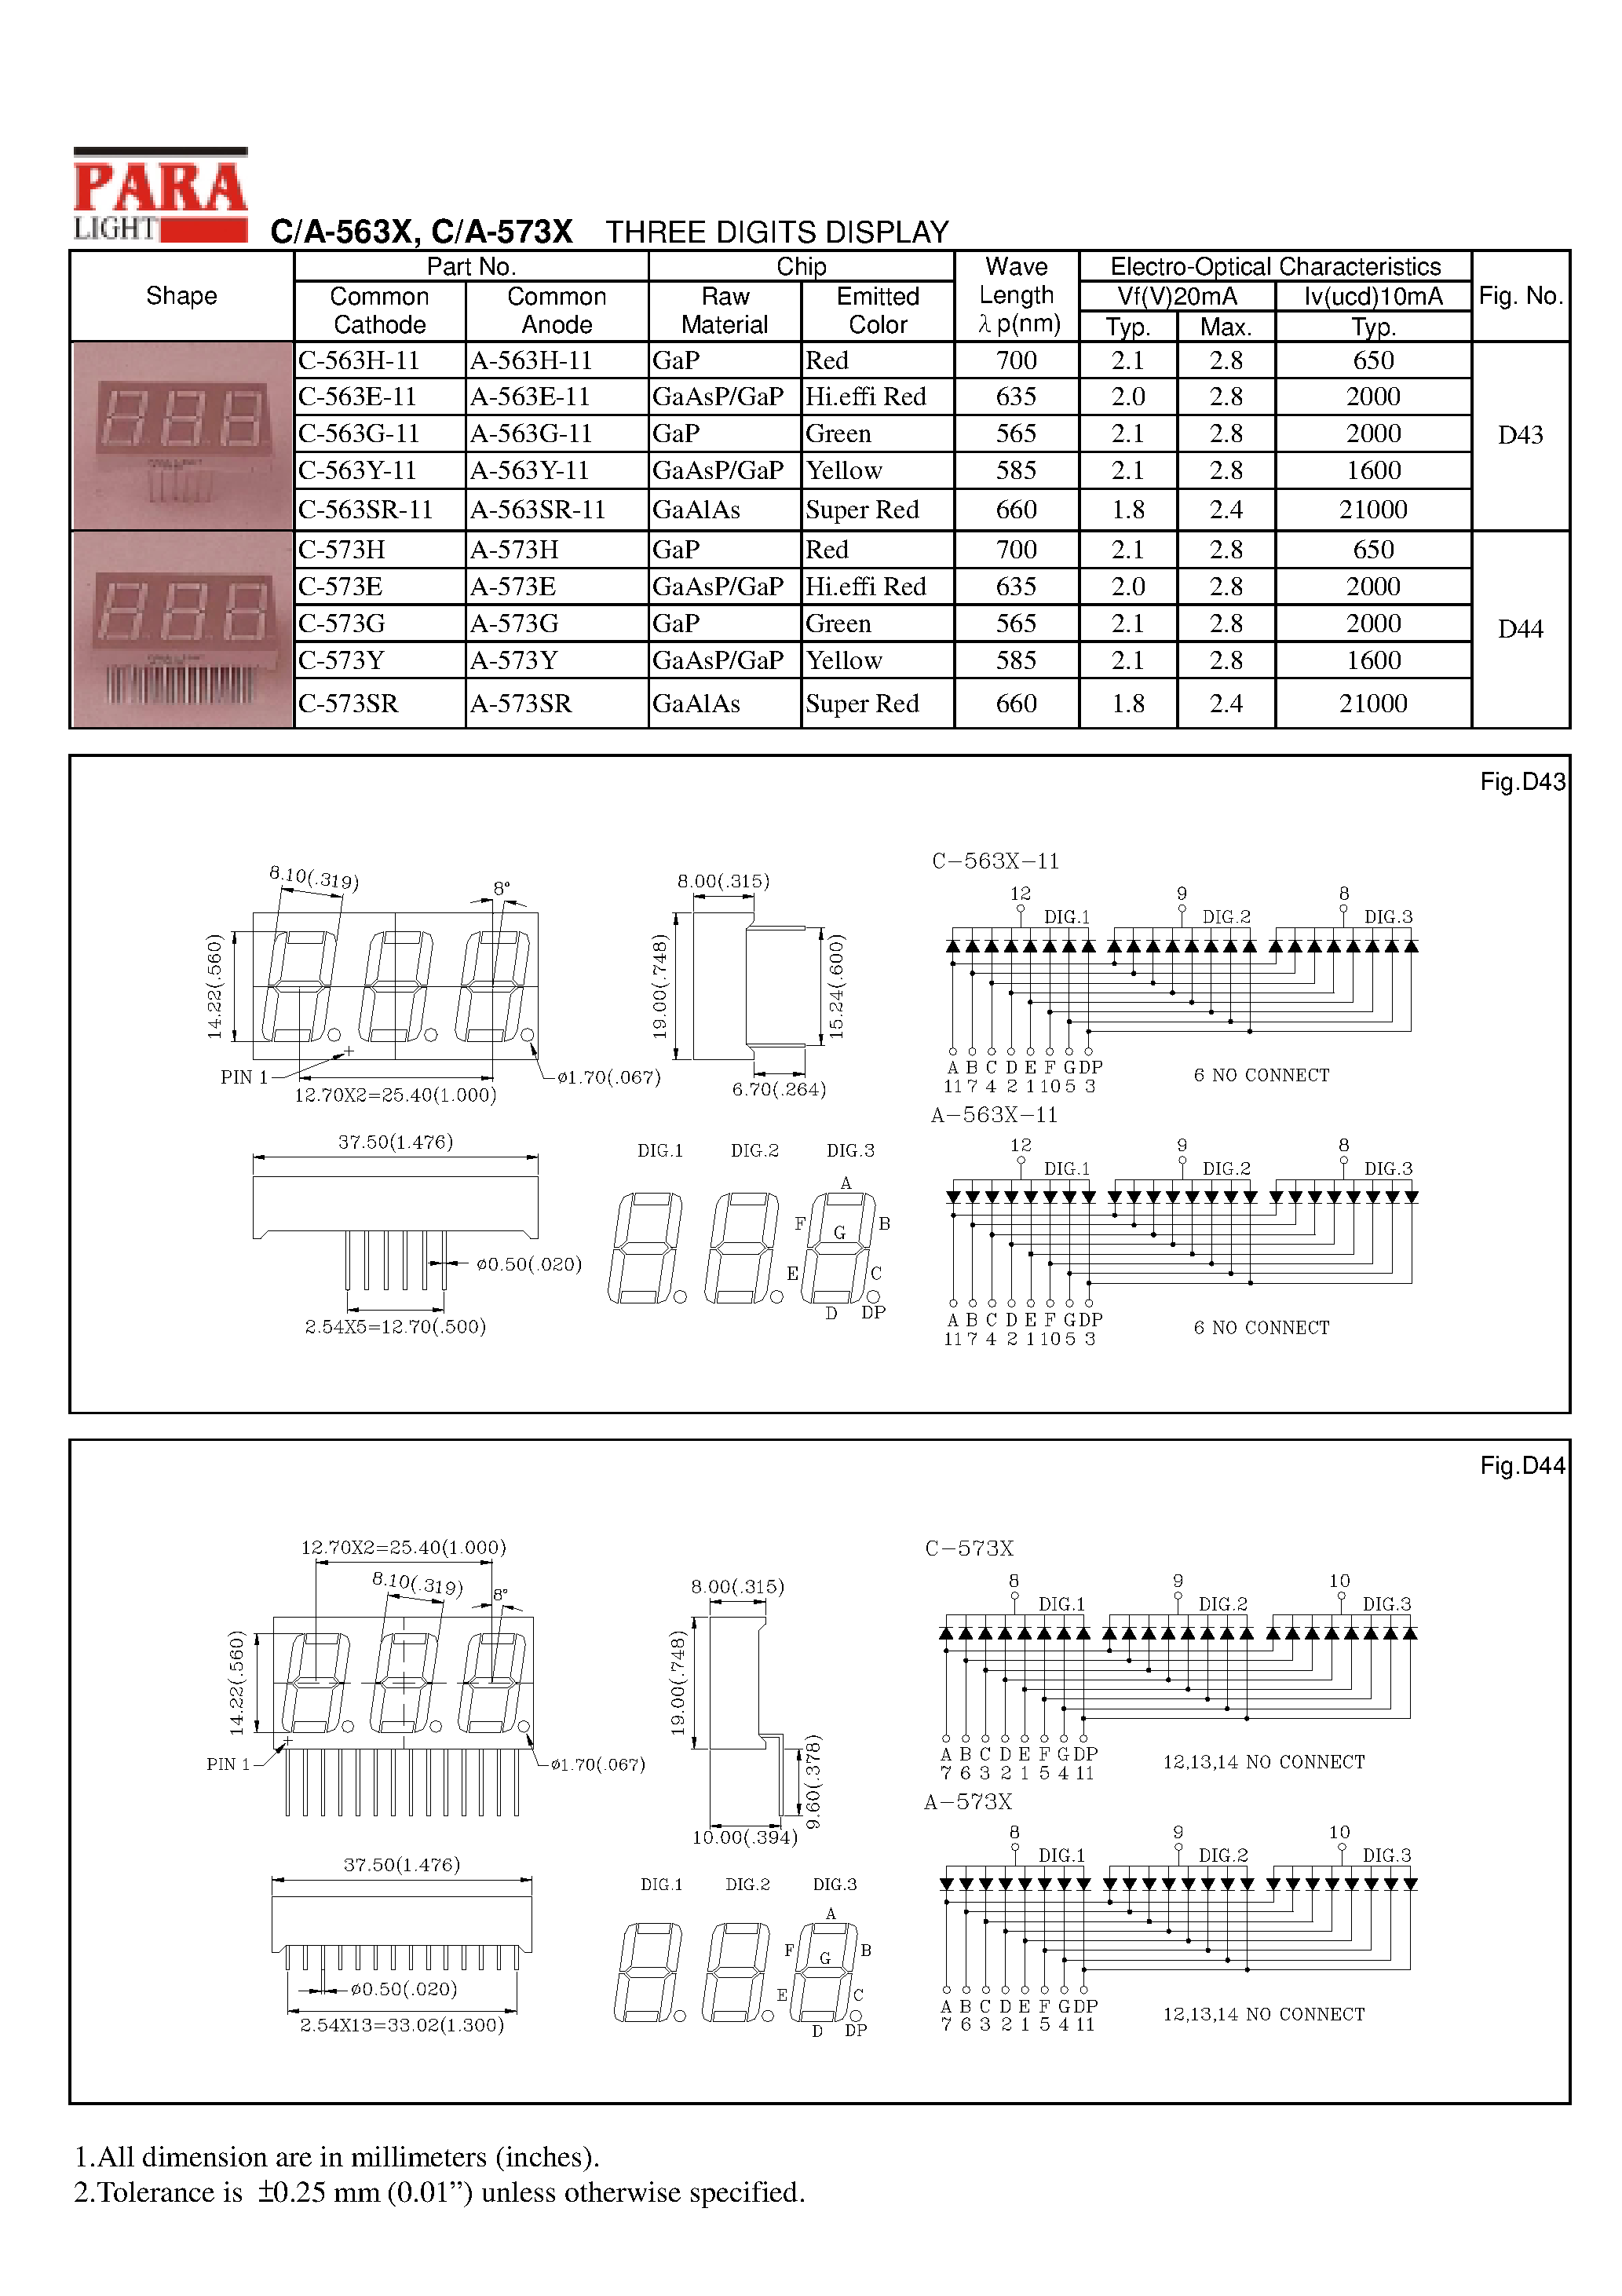 Datasheet A-573H - THREE DIGITS DISPLAY page 1